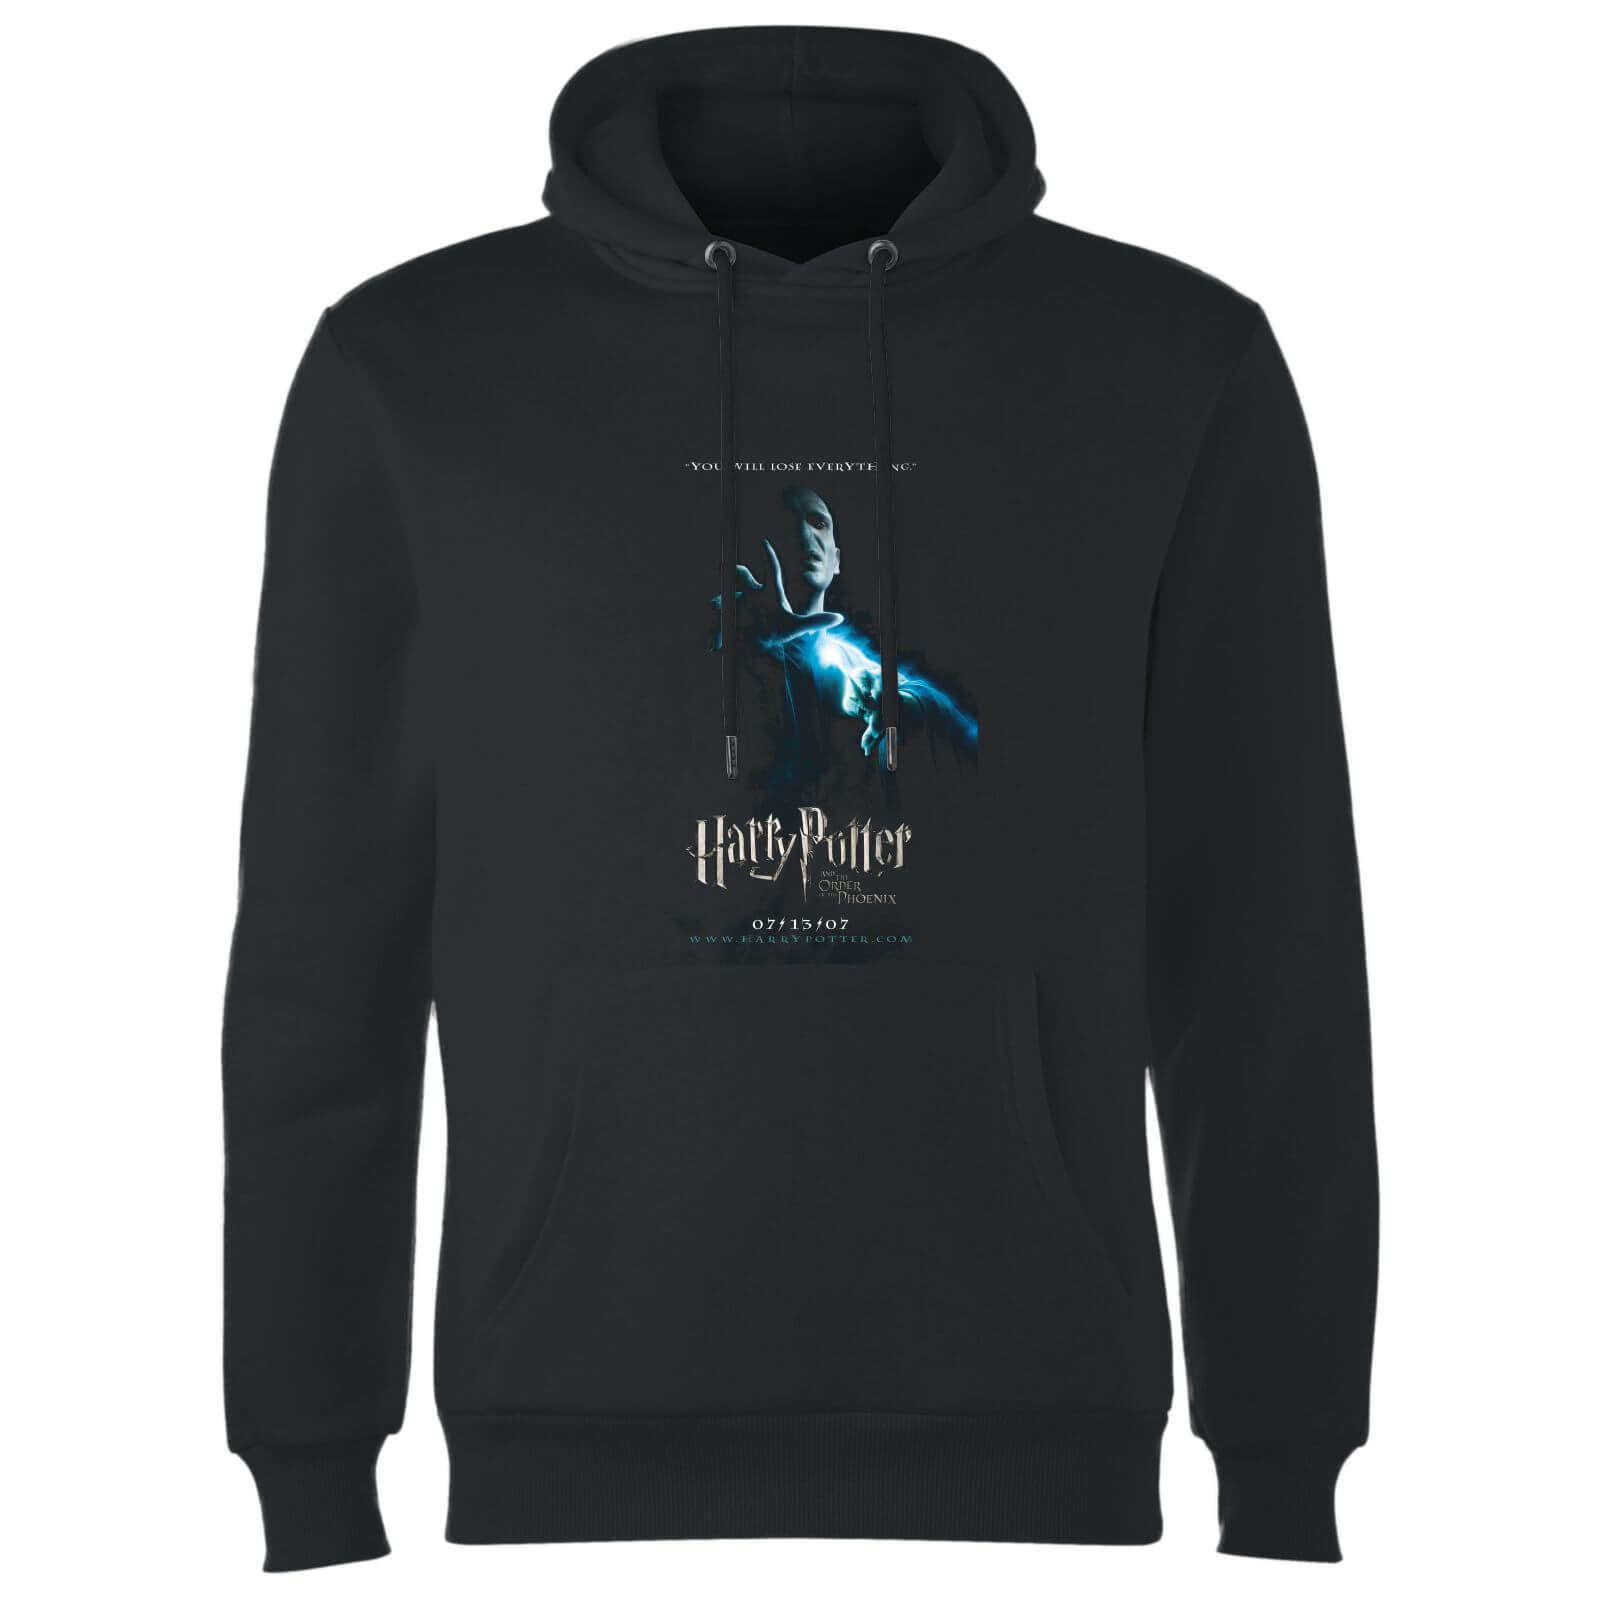 Harry Potter Order Of The Phoenix Hoodie - Black - XL - Black